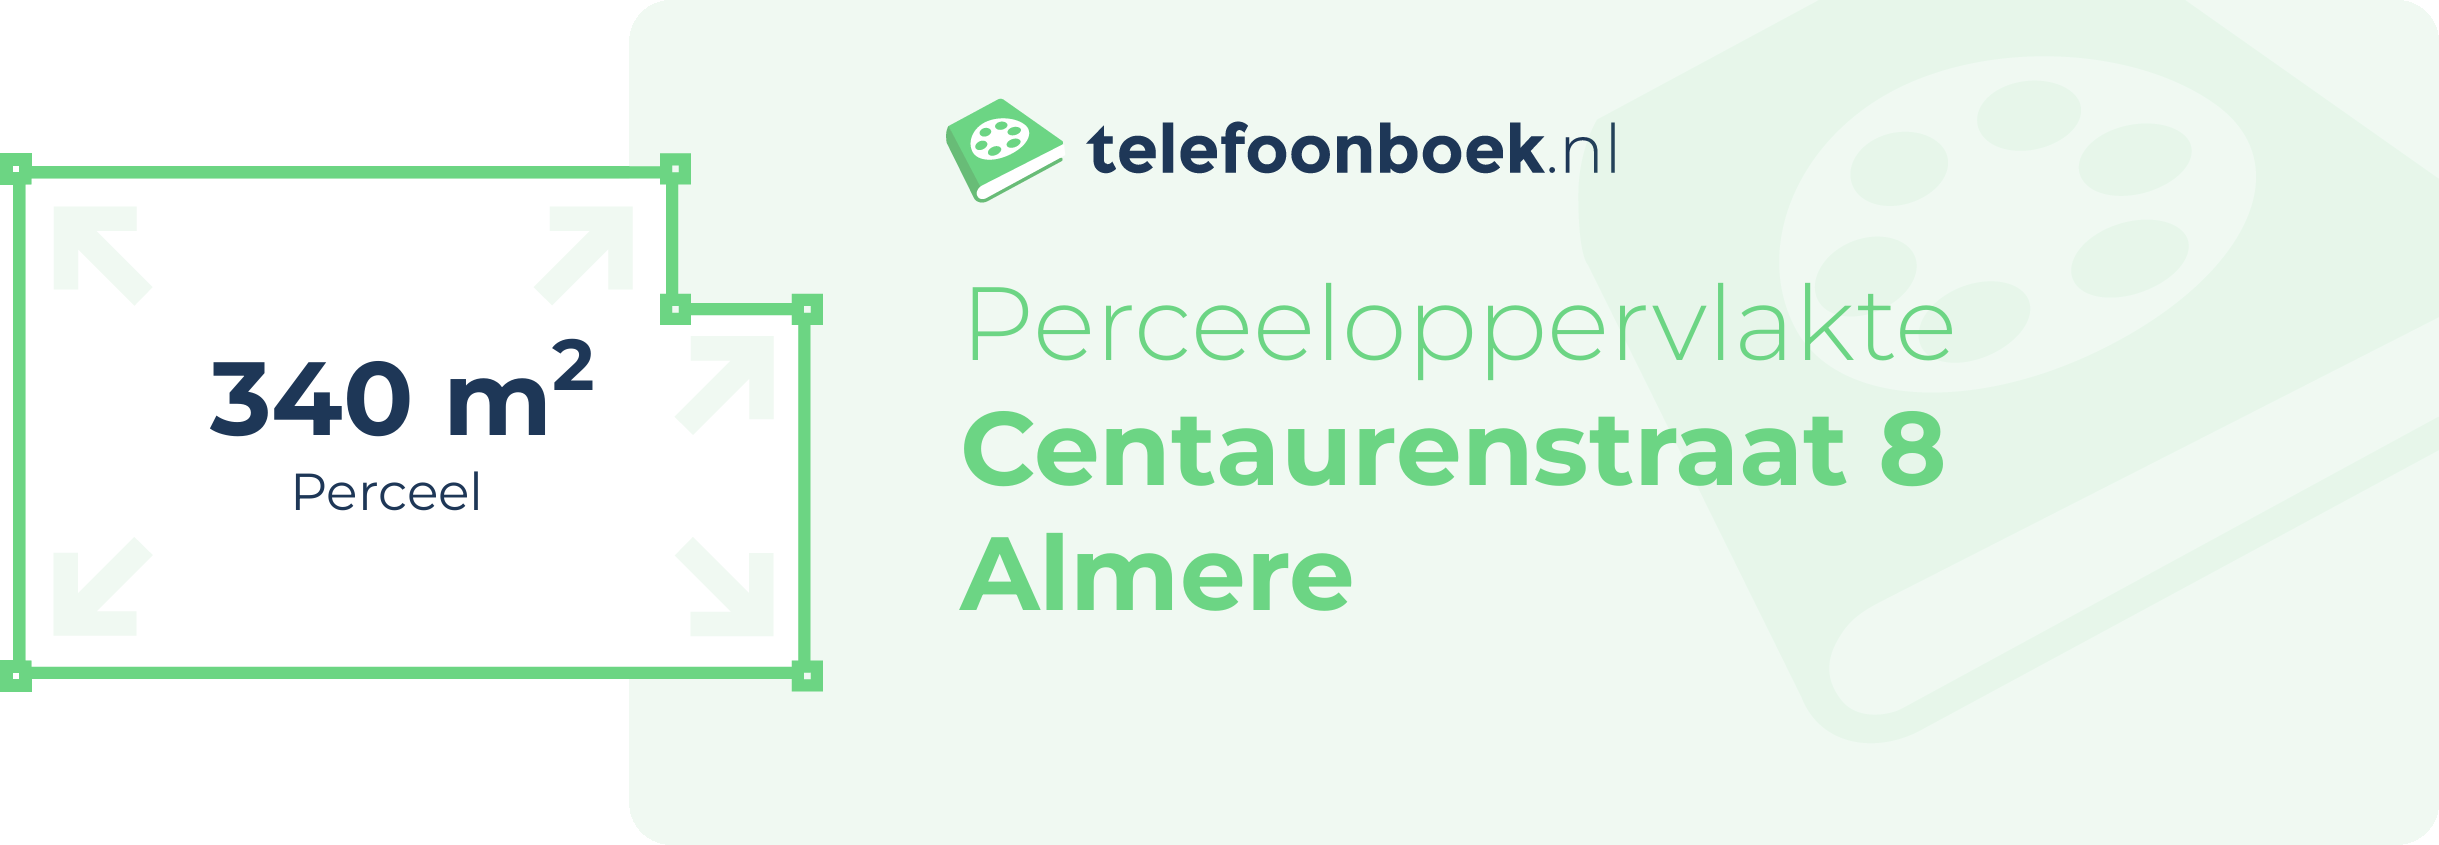 Perceeloppervlakte Centaurenstraat 8 Almere